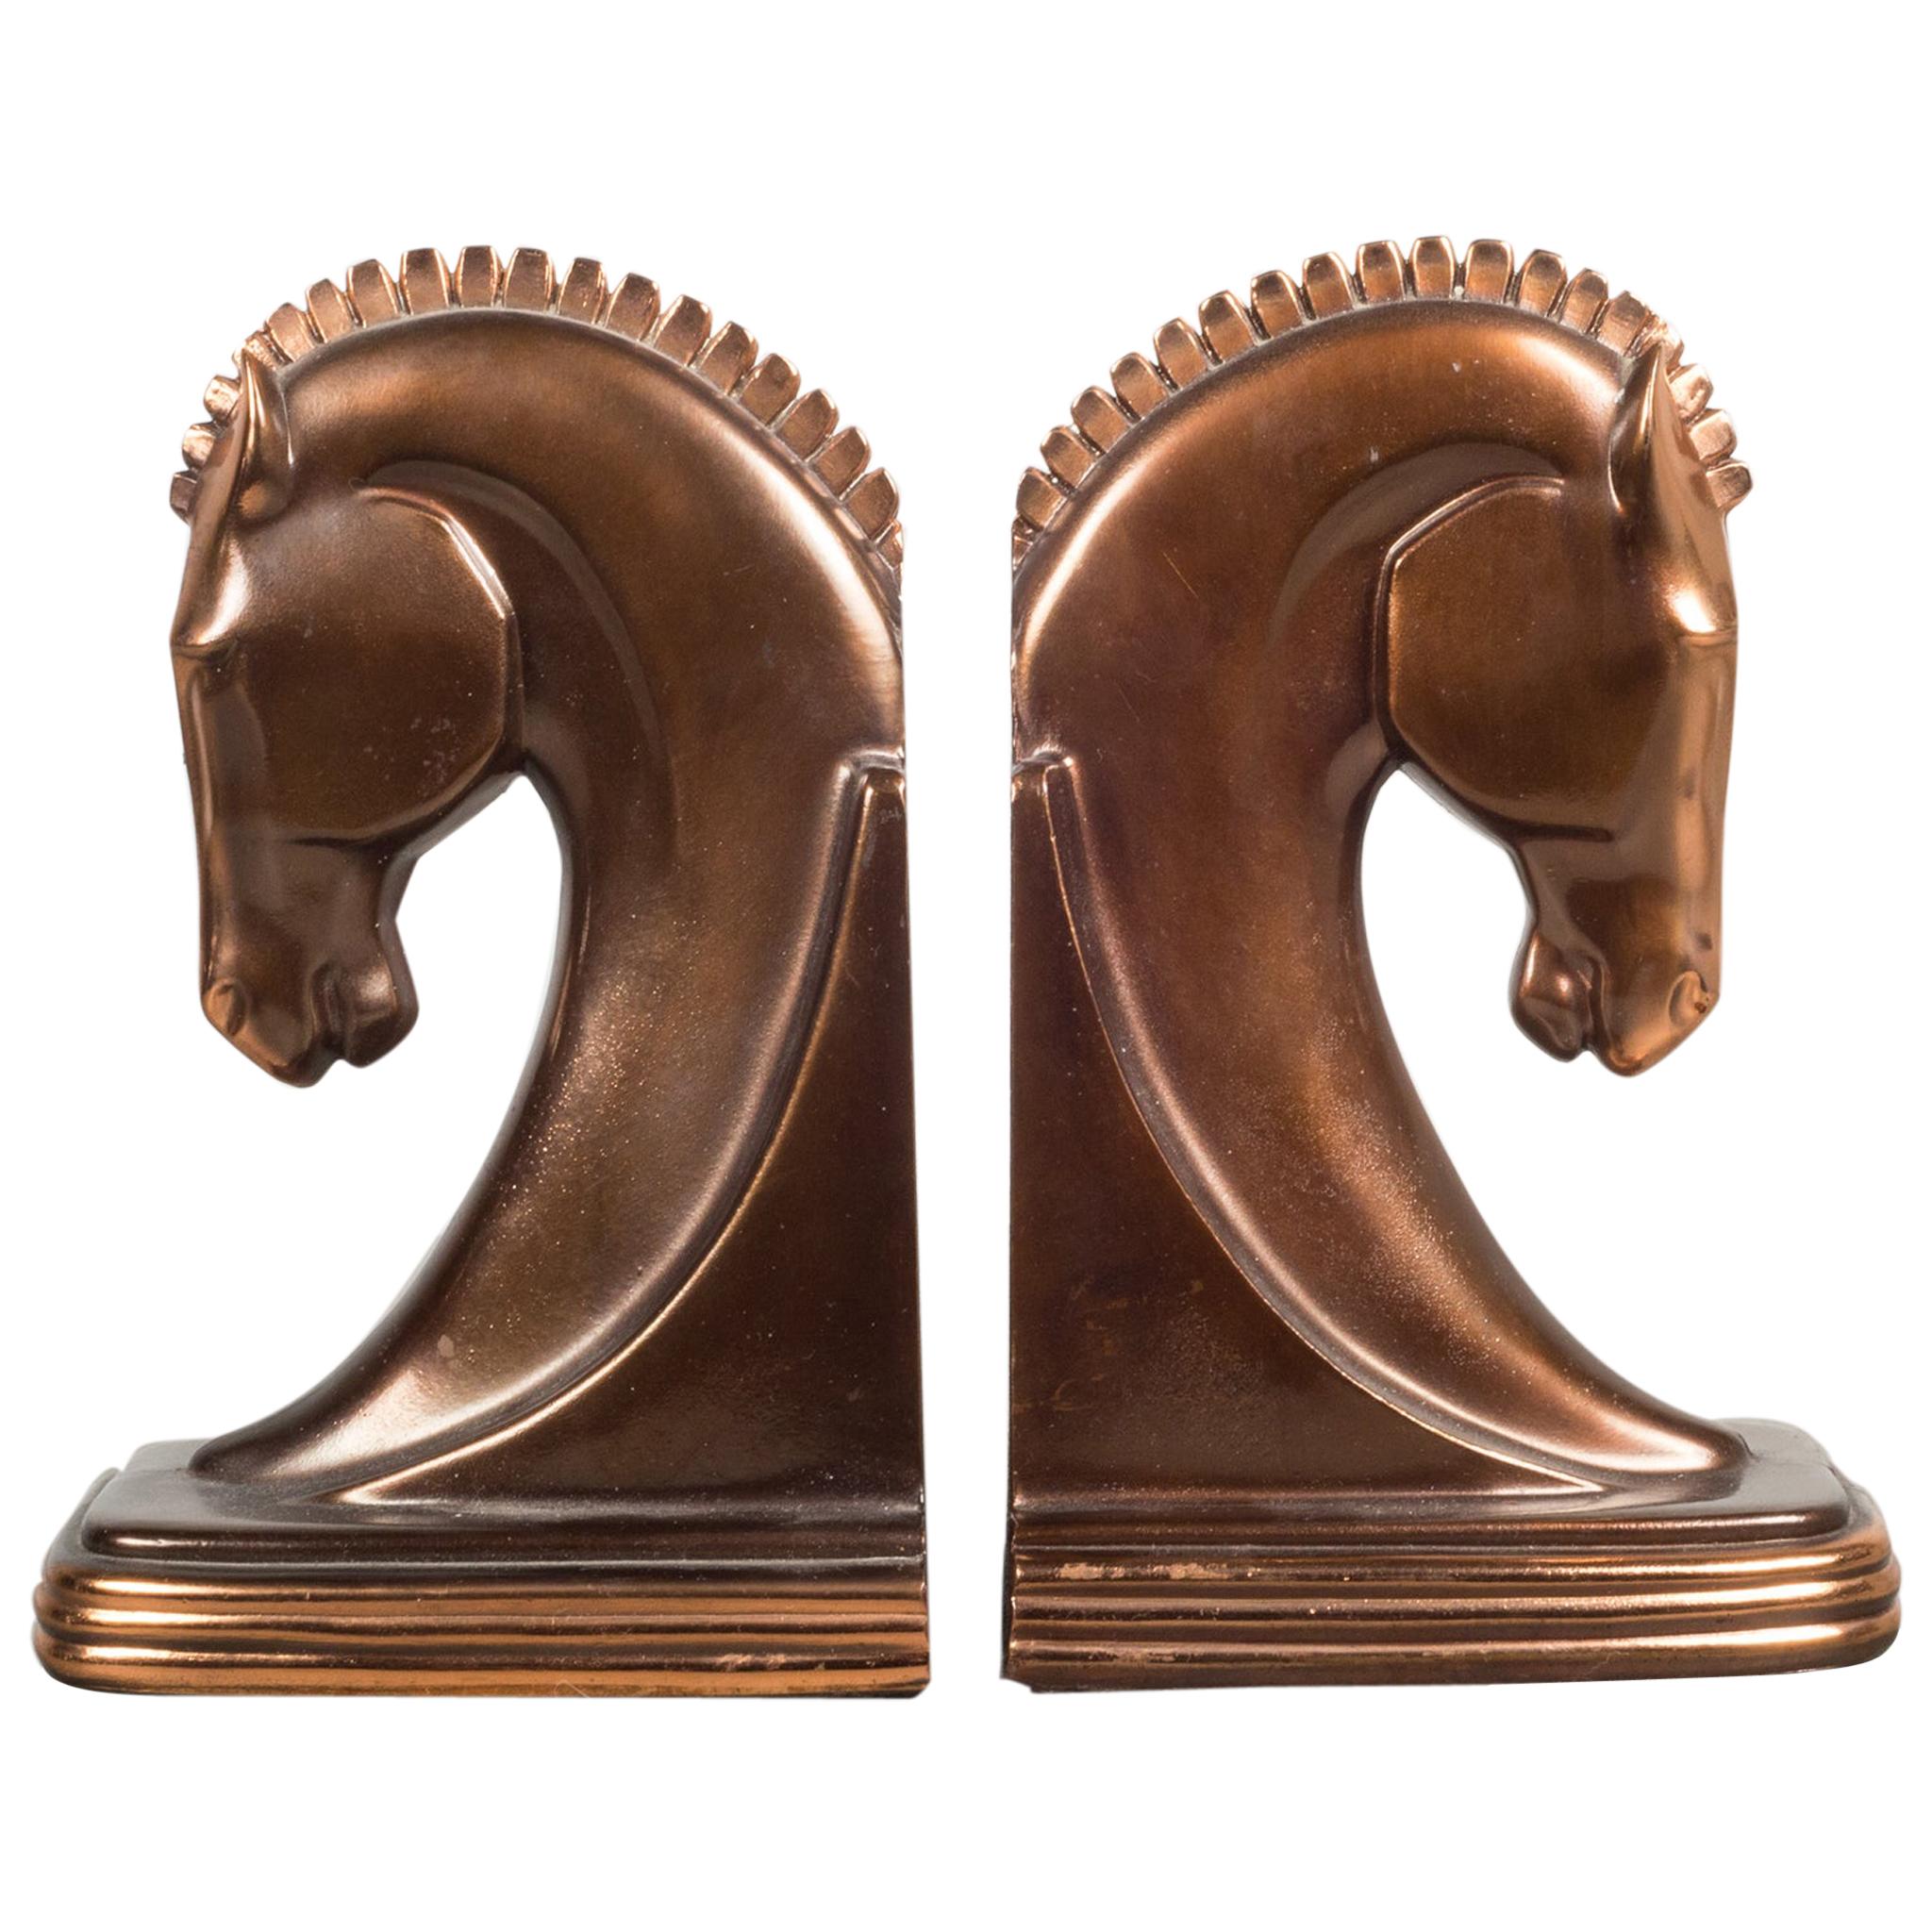 Bronze & Copper Plated Machine Age Trojan Horse Bookends by Dodge, circa 1930s